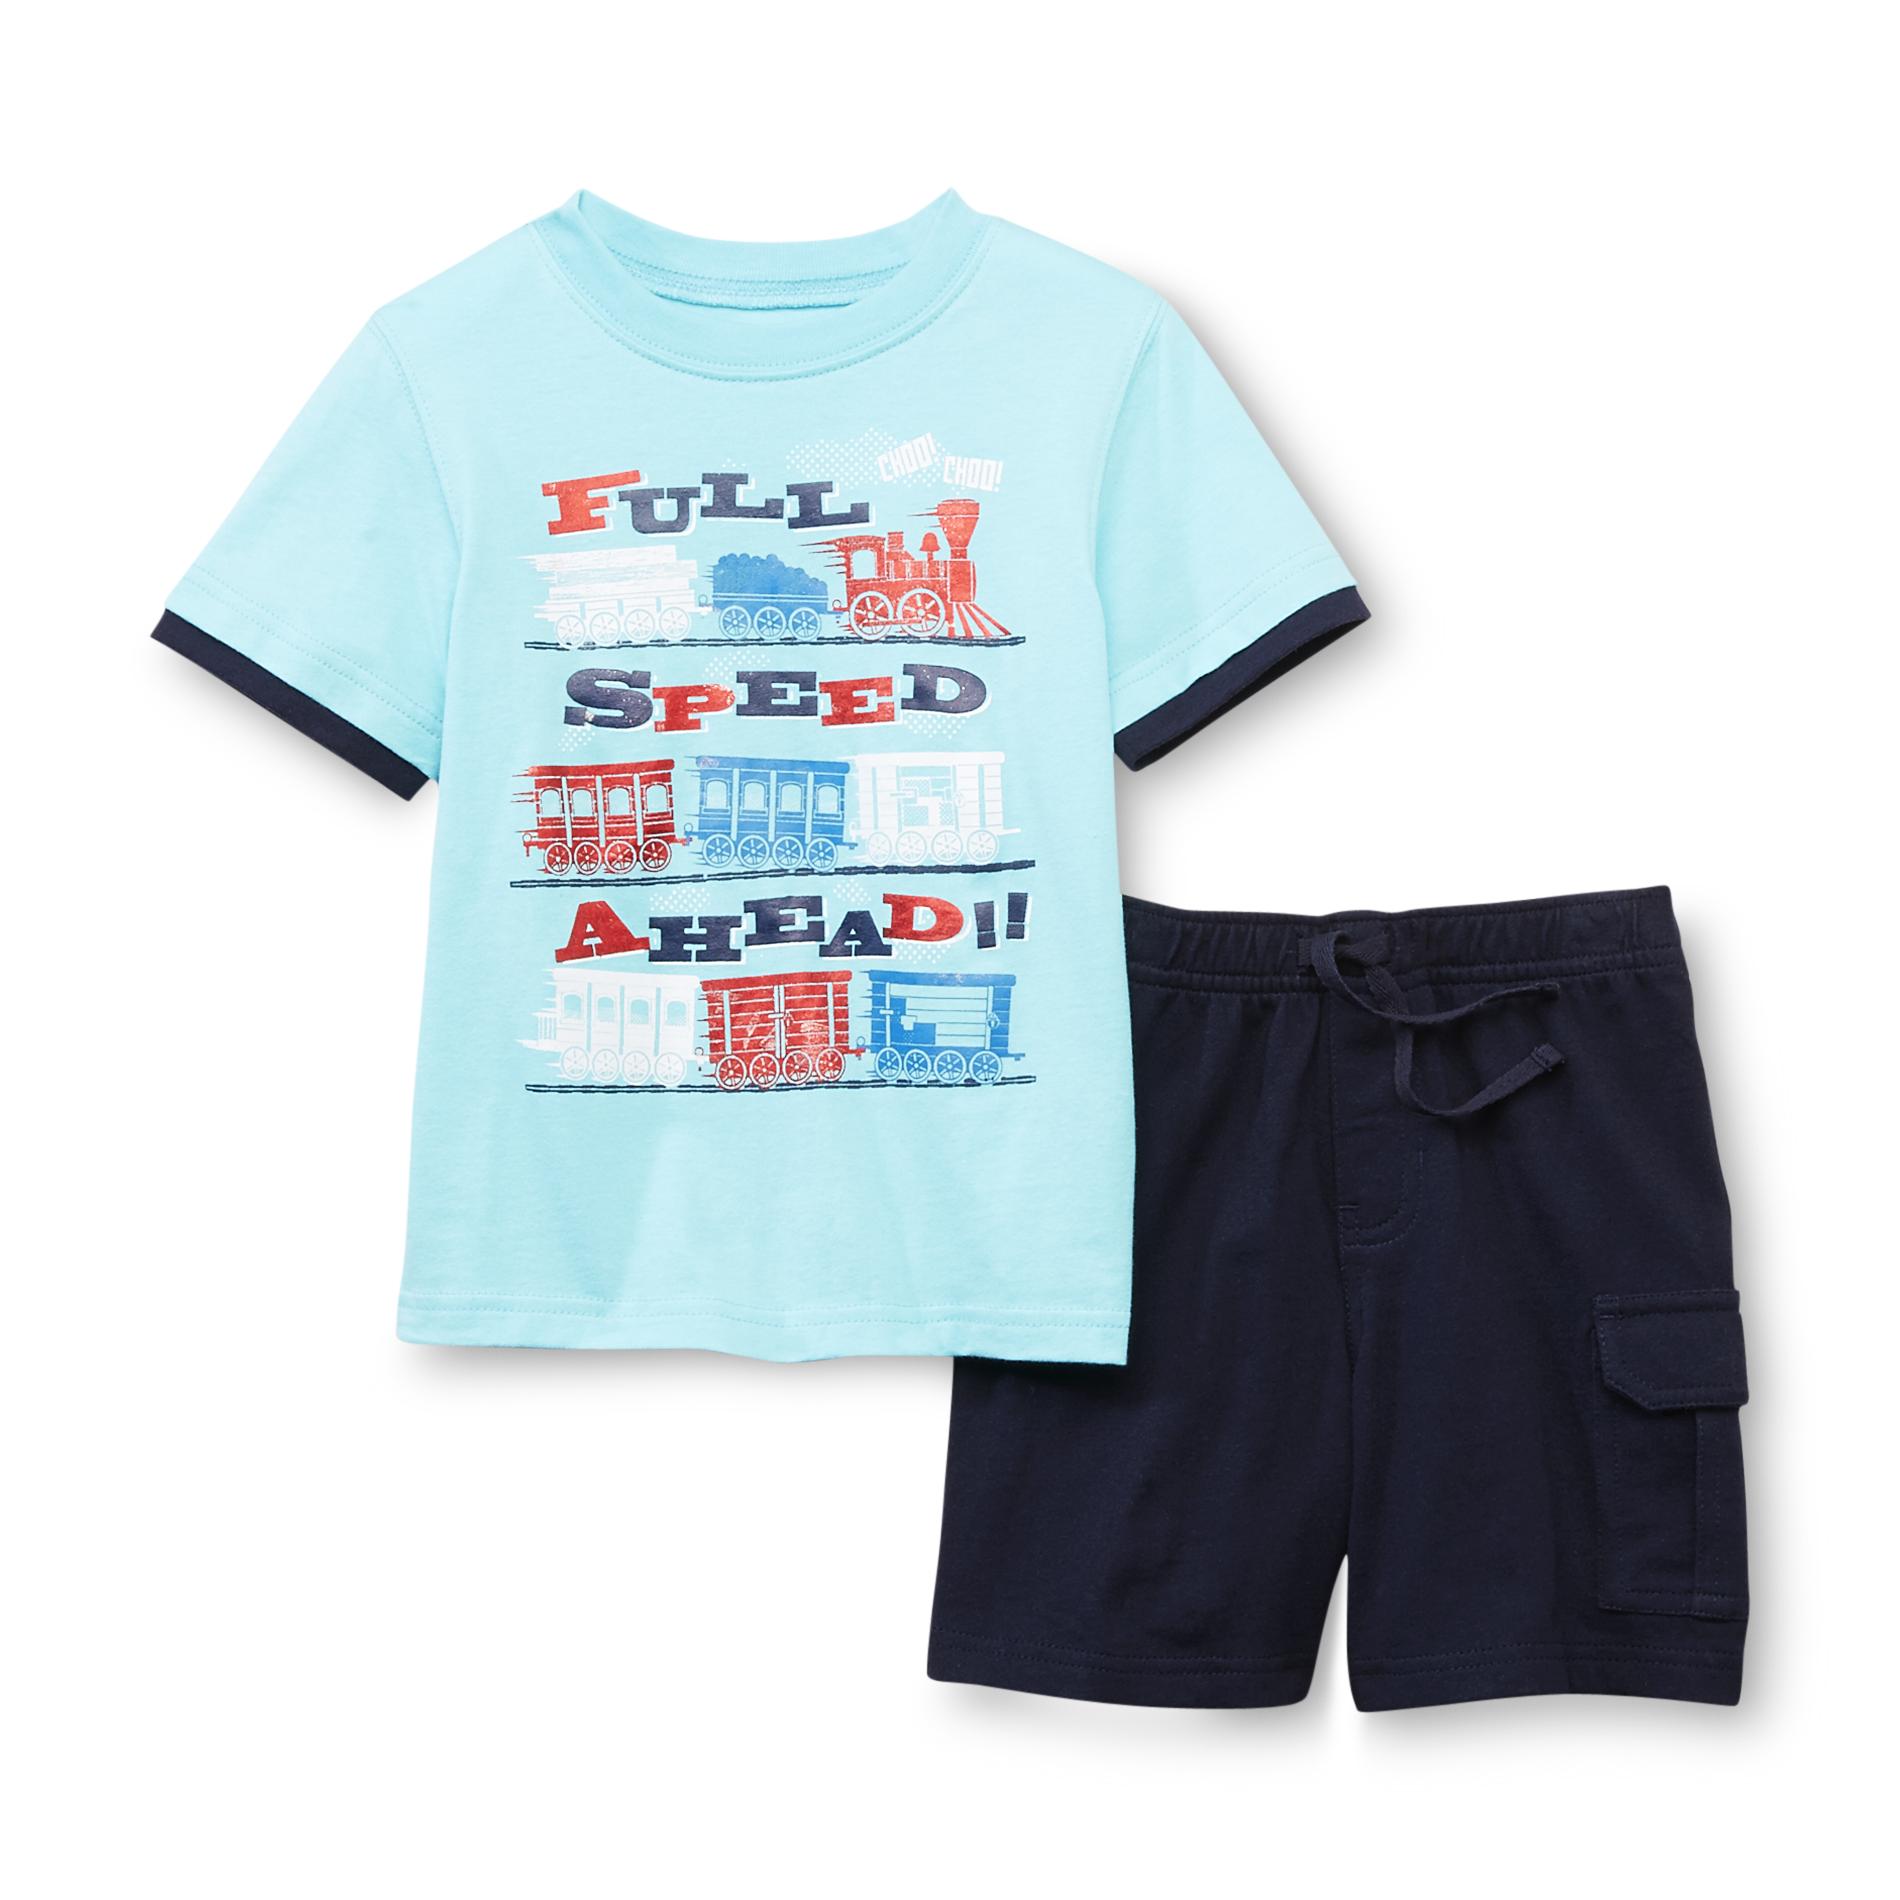 Toughskins Infant & Toddler Boy's T-Shirt & Shorts